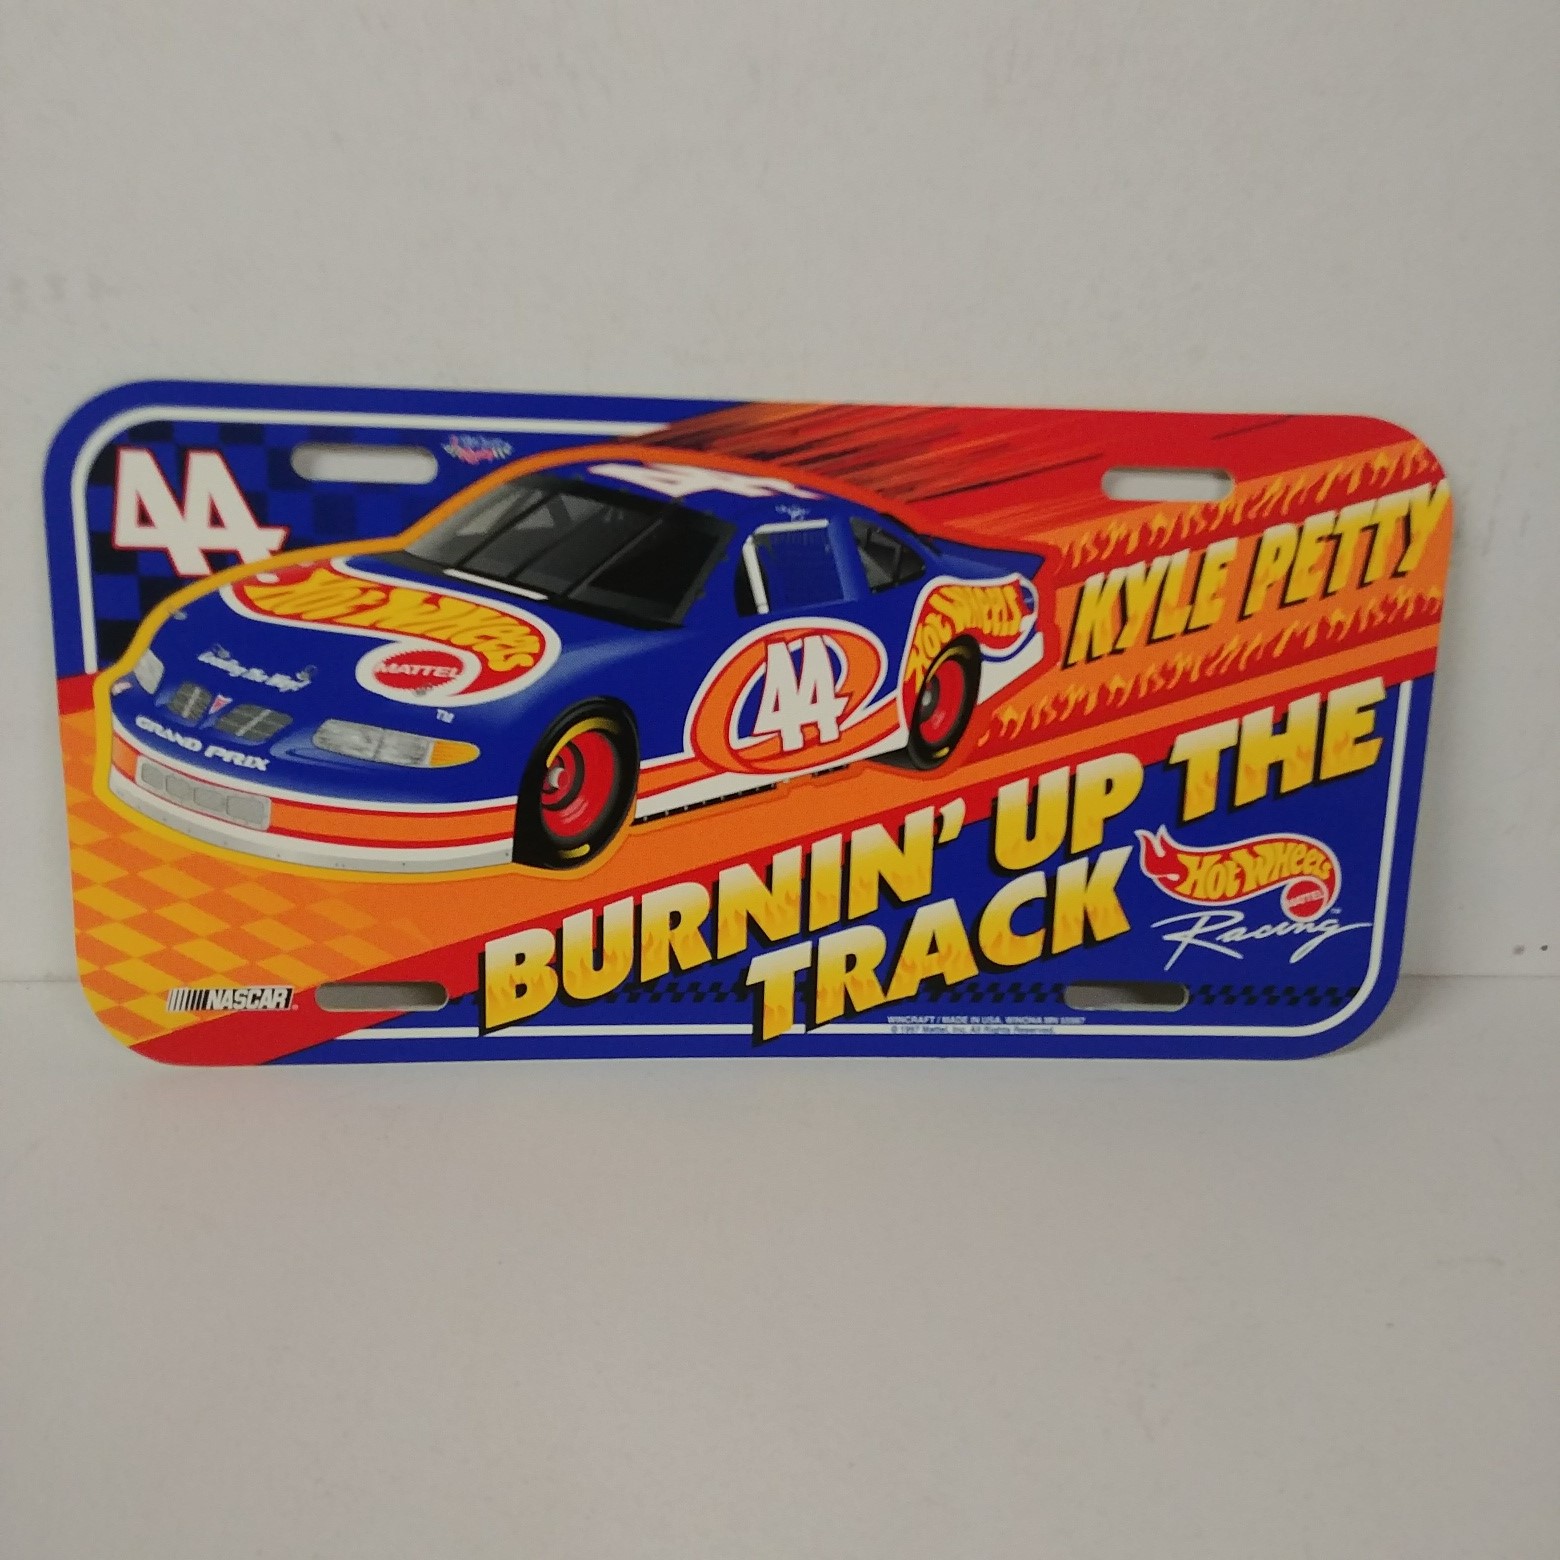 1997 Kyle Petty Hot Wheels plastic license plate